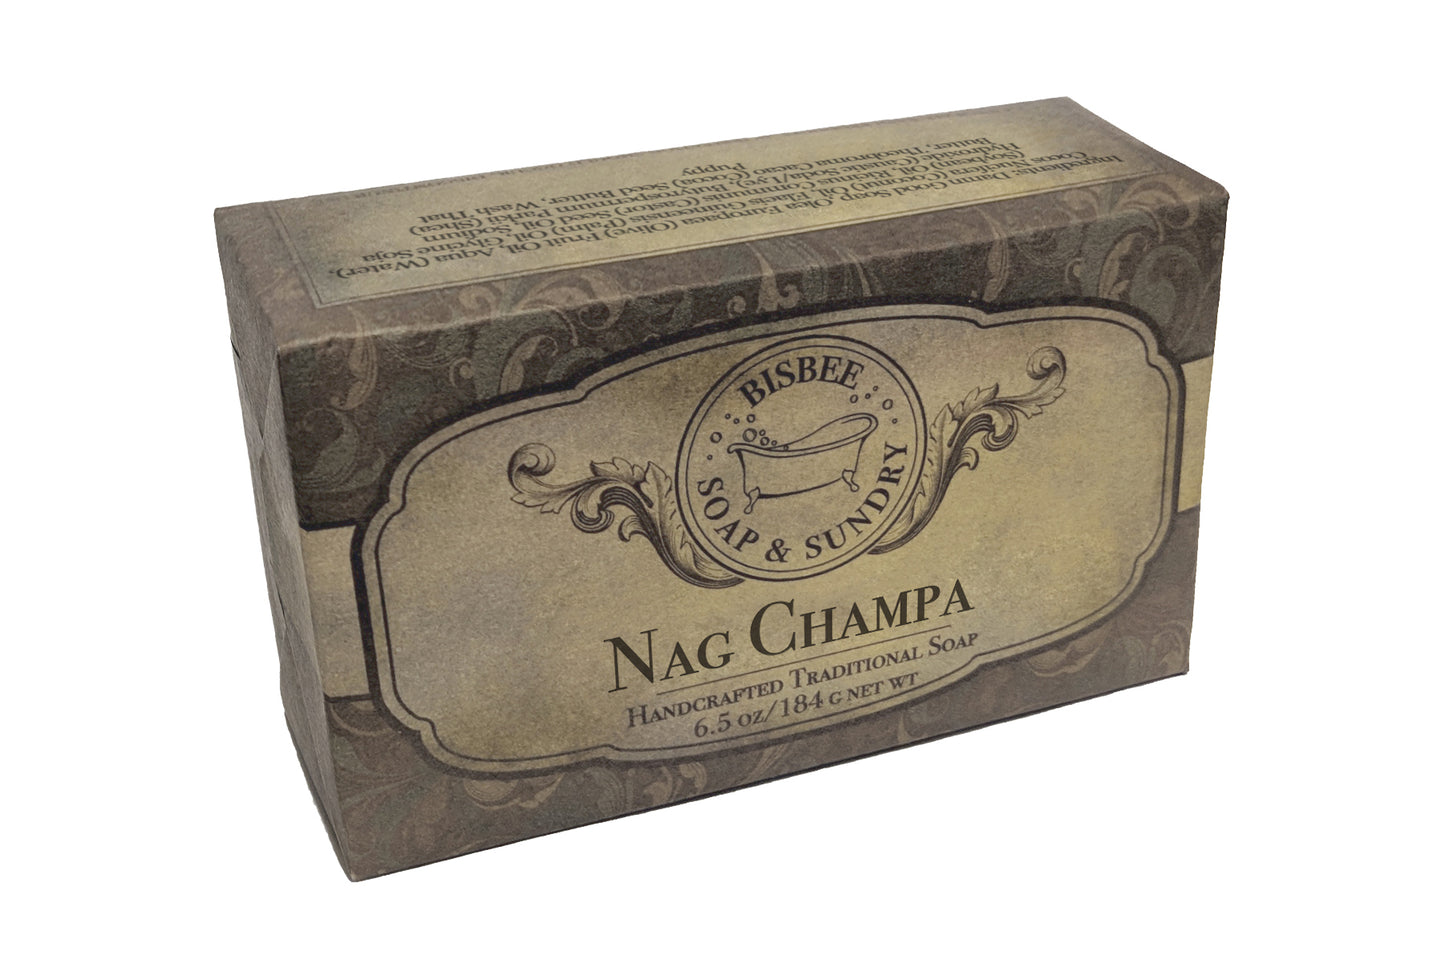 Nag Champa Beauty Soap 75g Bar 